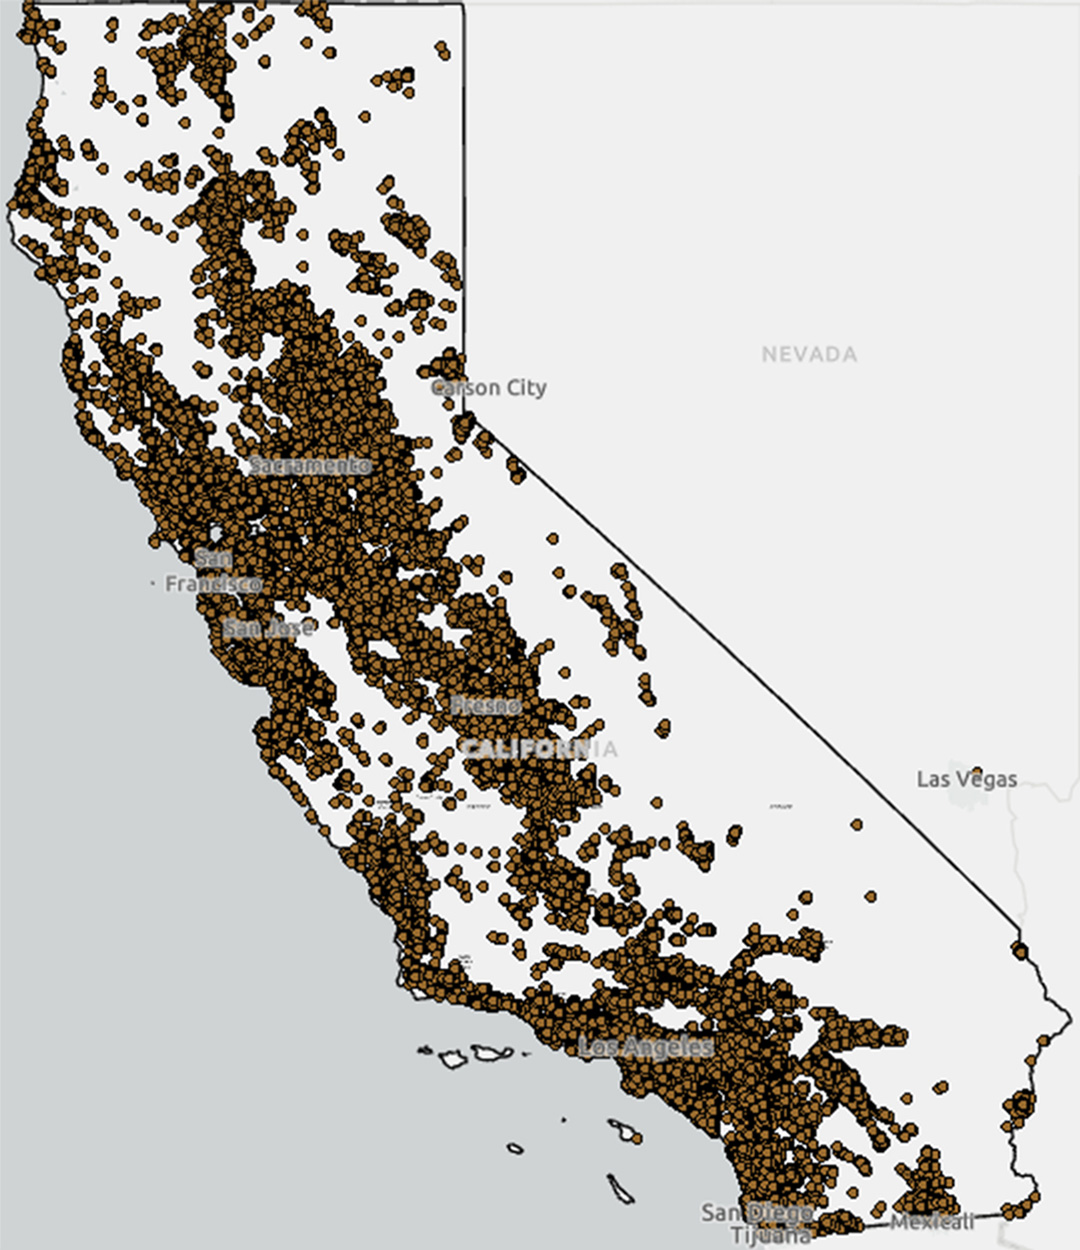 ArcGIS Pro map displaying organ donors across California.